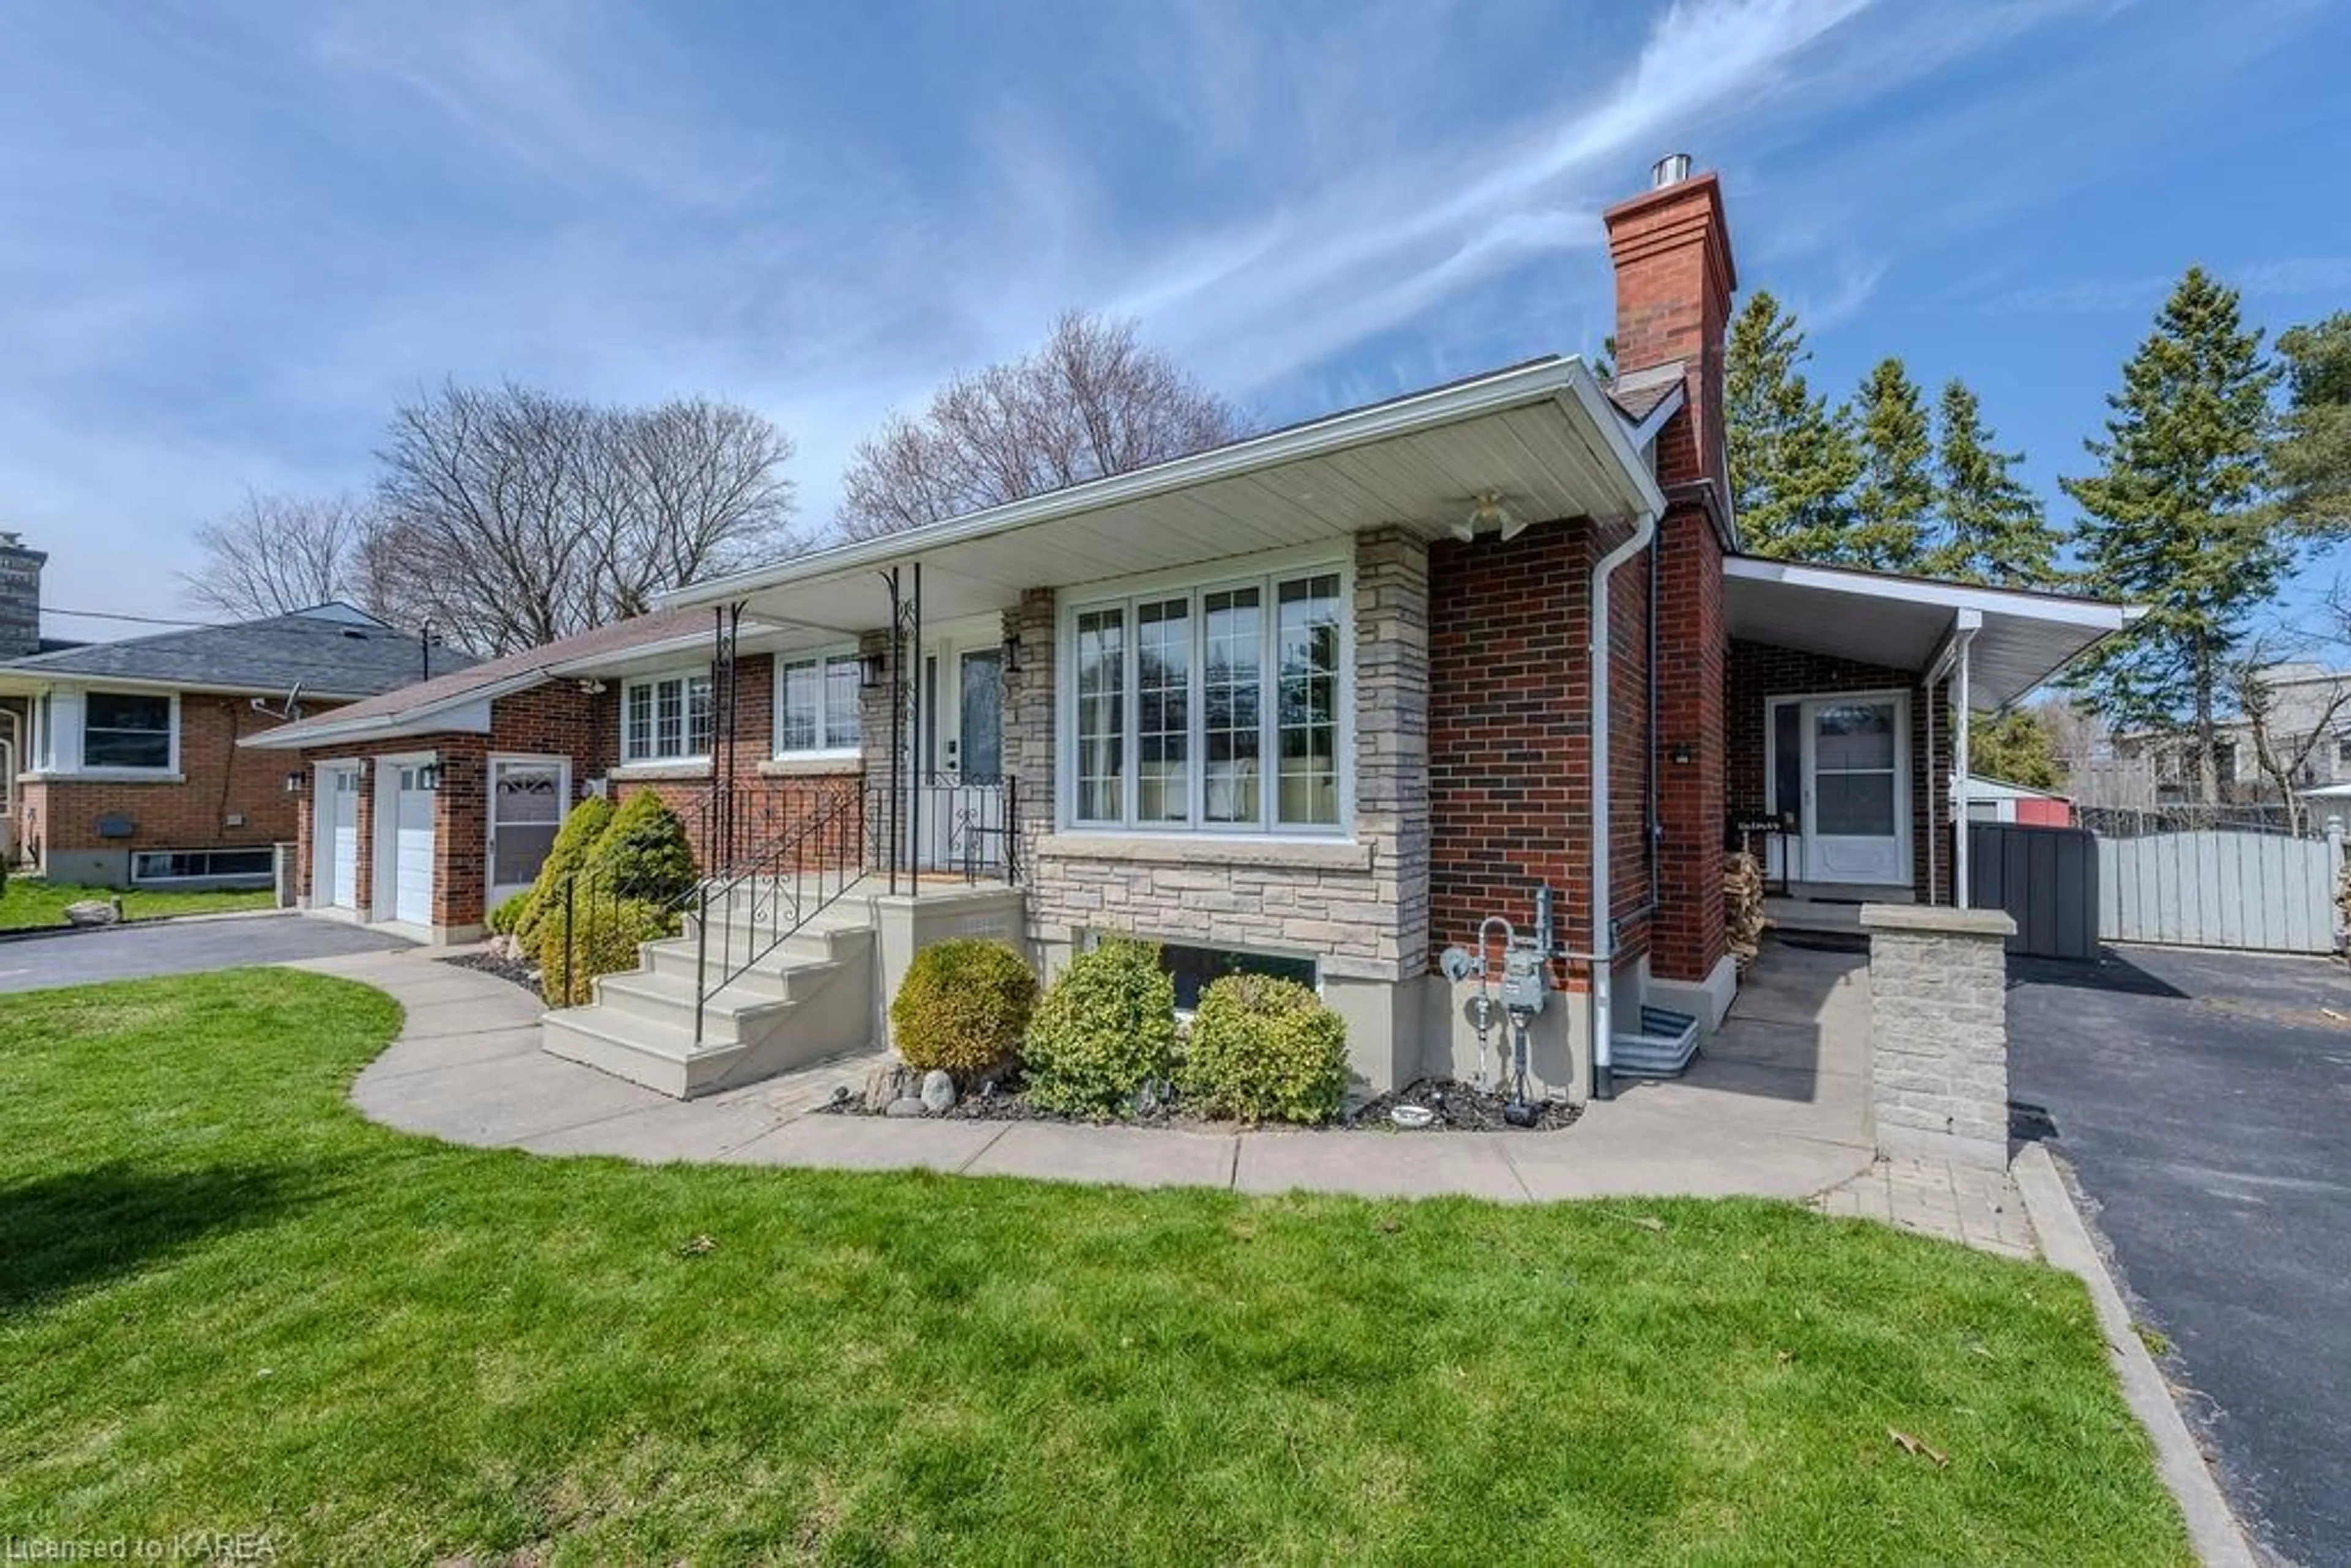 Home with brick exterior material for 19 Redden St, Kingston Ontario K7M 4K9